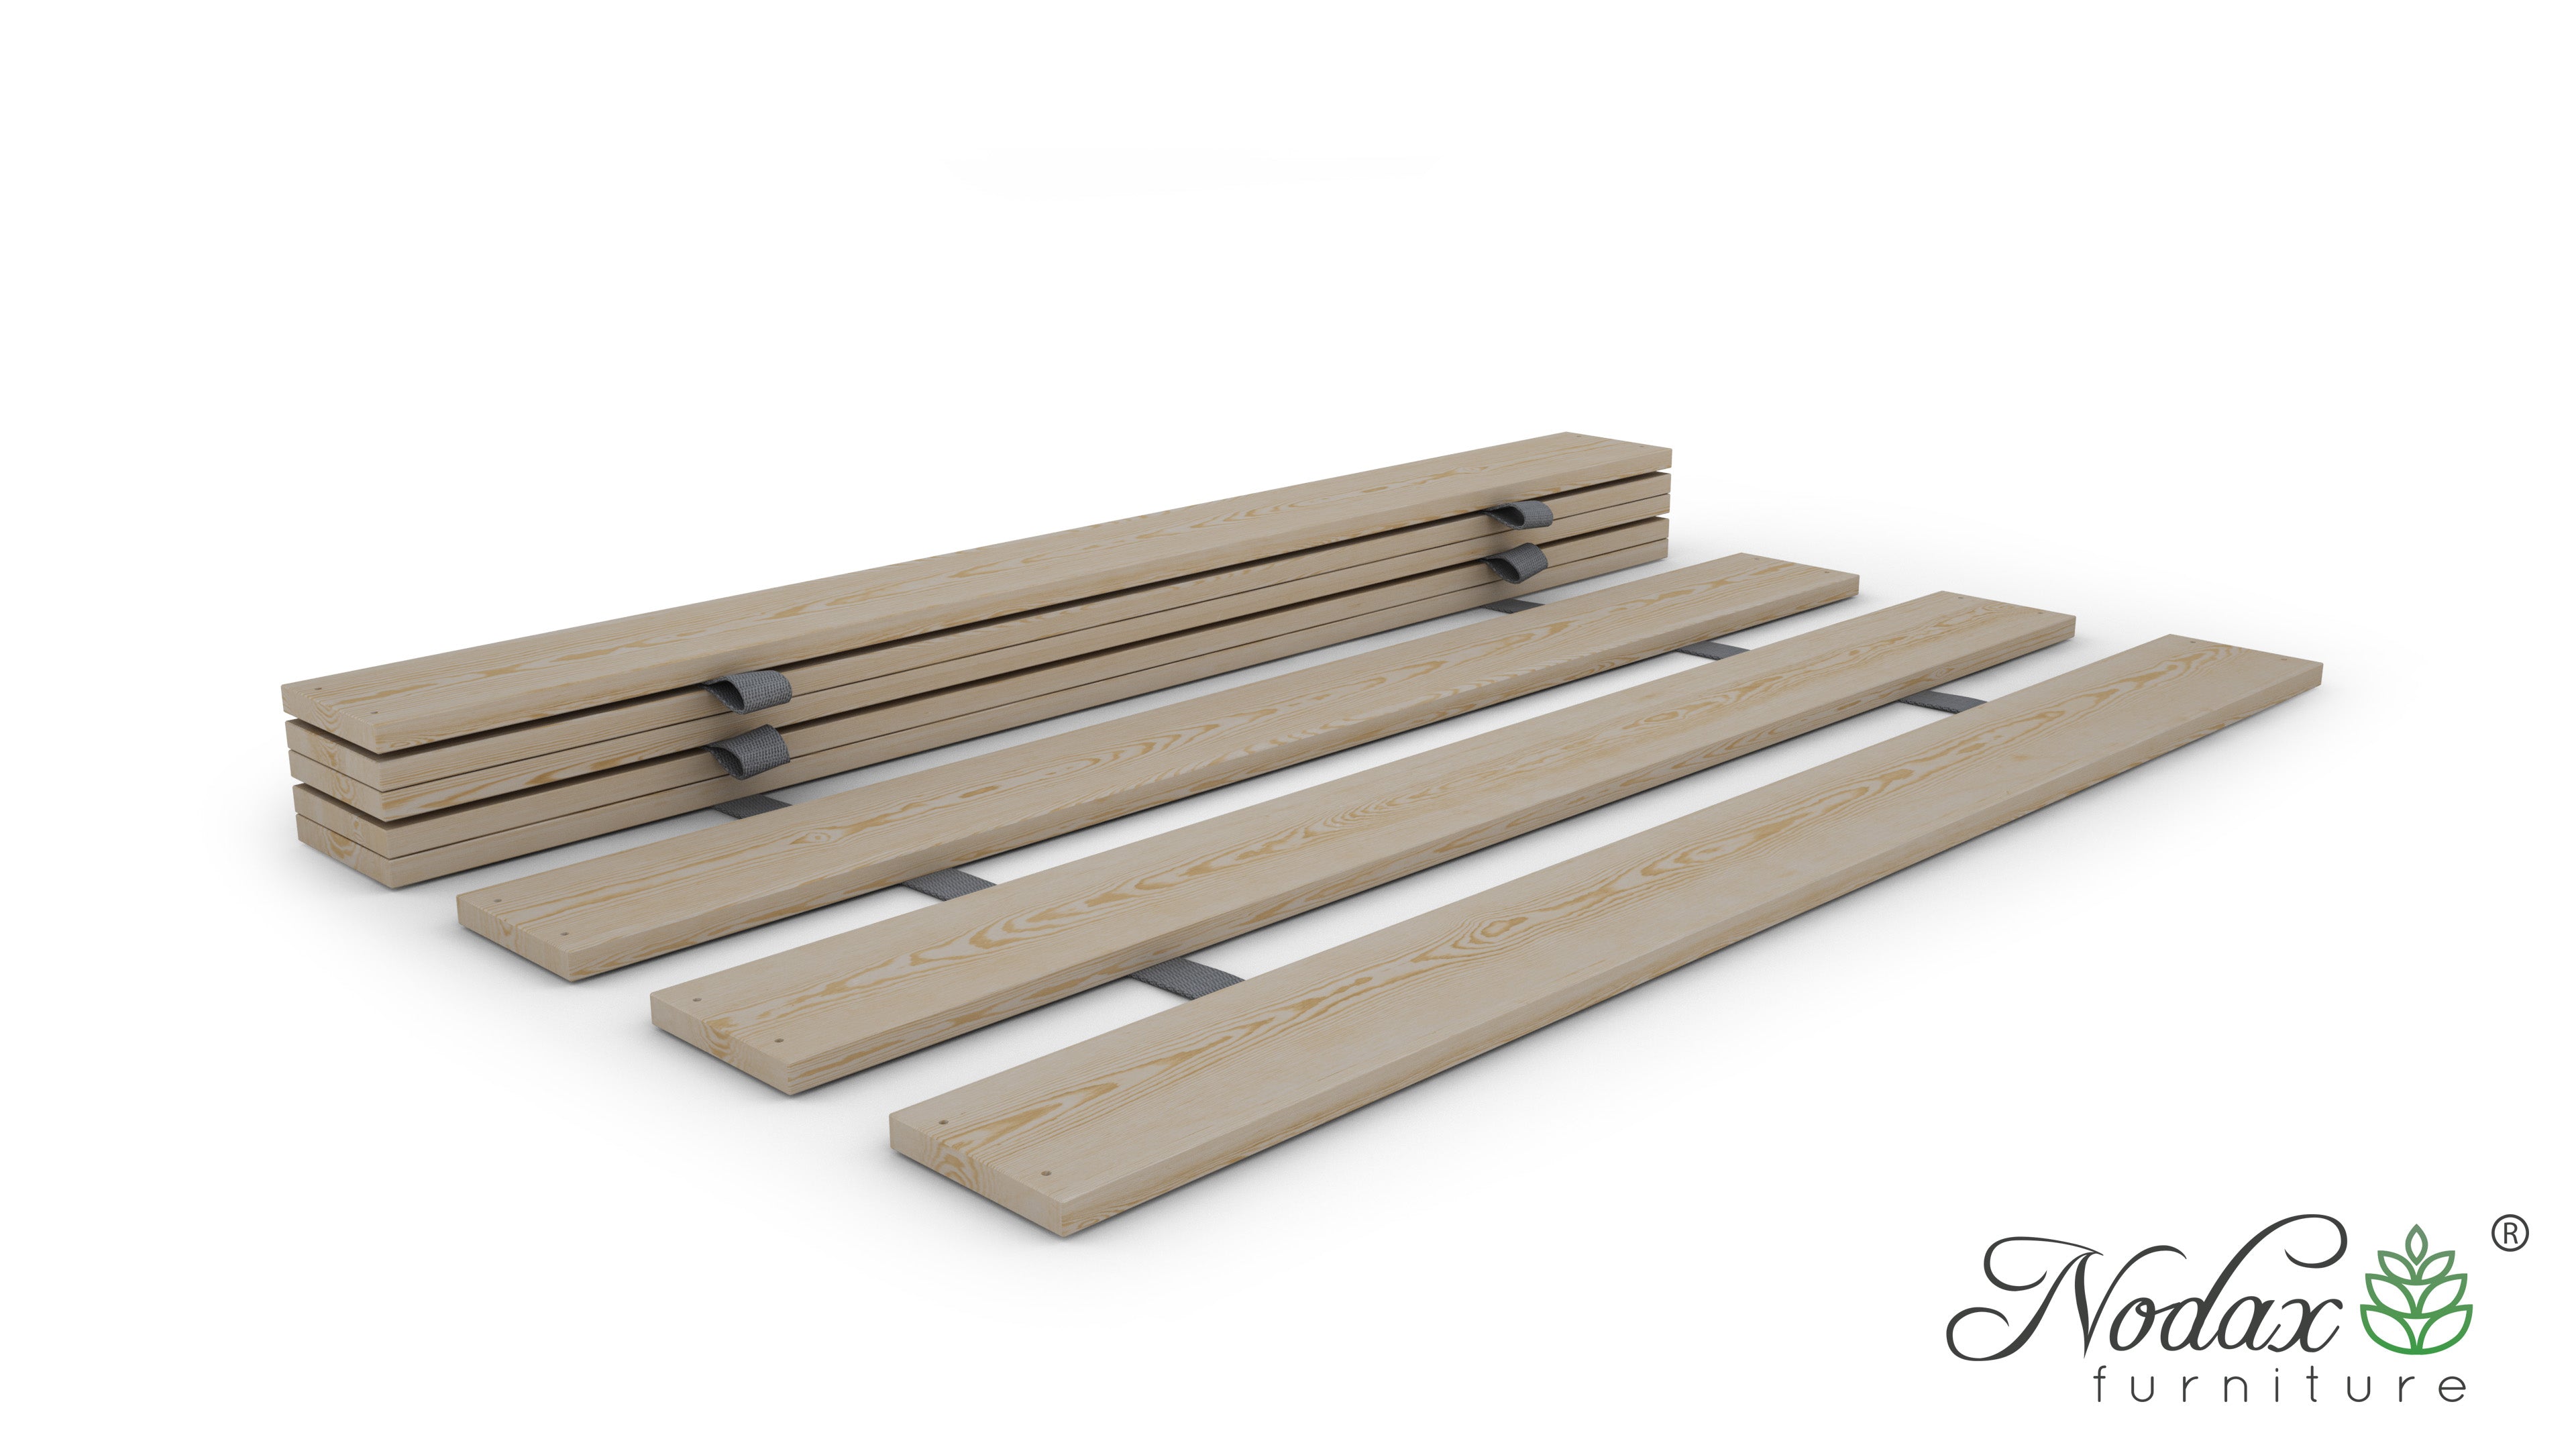 Wooden-slats-Nodax-platform-Eta